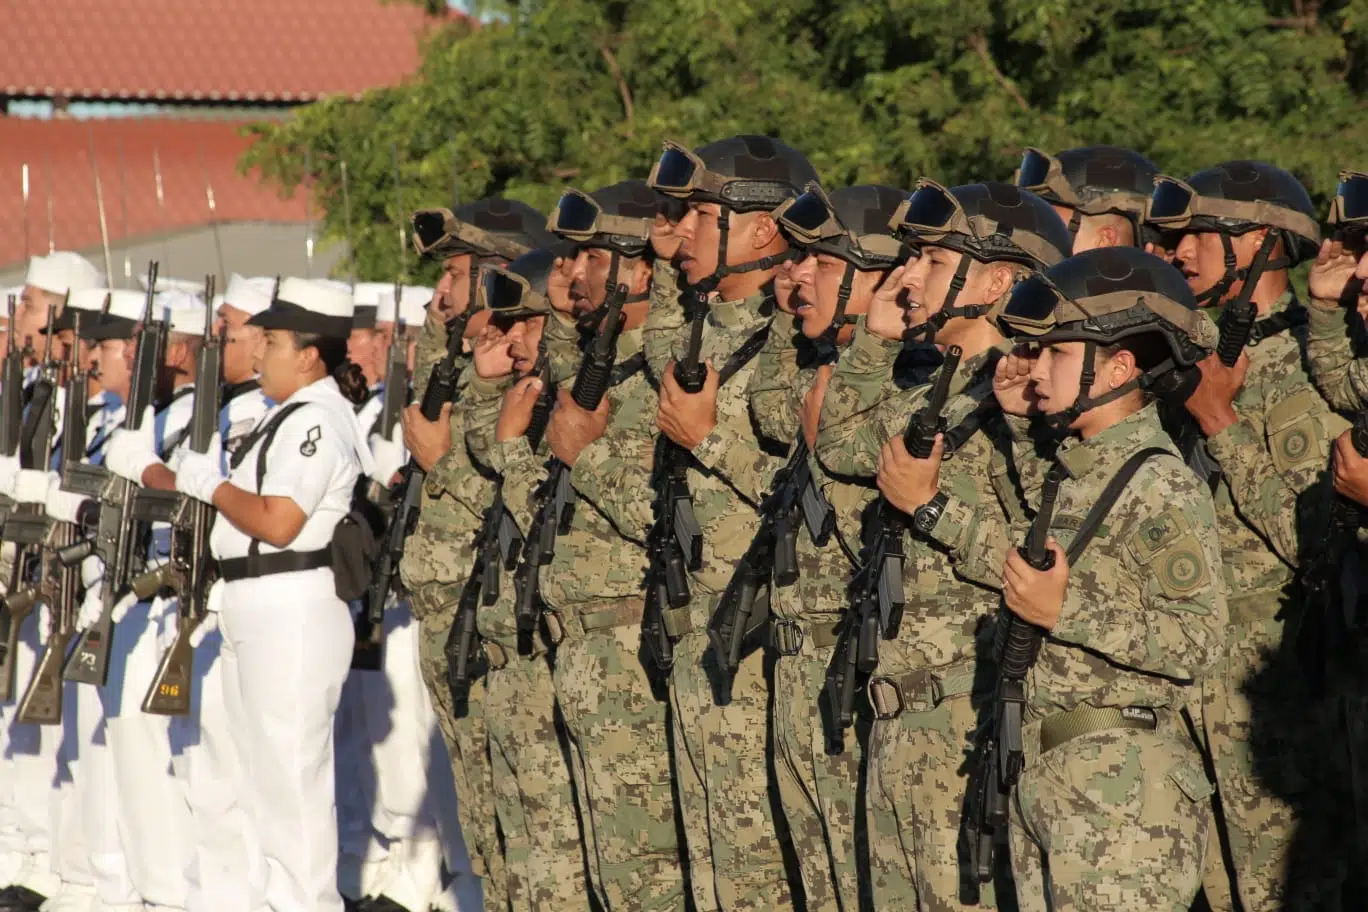 Ejército Mexicano